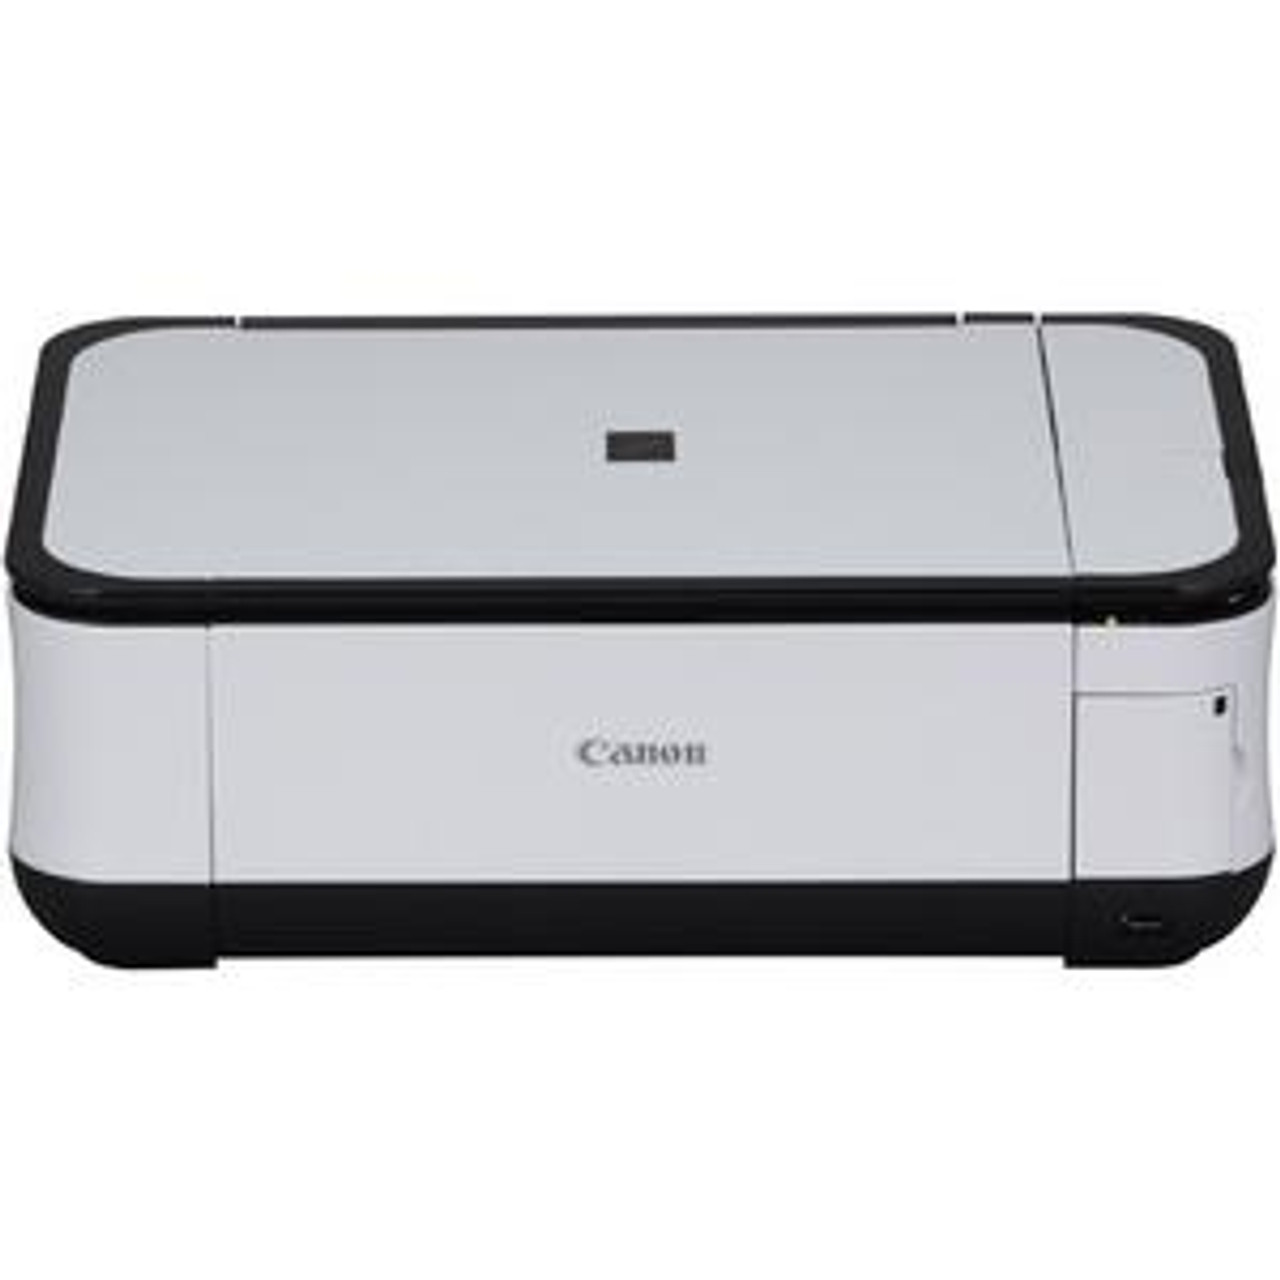 MP480 - Canon PIXMAMultifunction Photo Printer Color 20 ppm Mono 16 ppm Color 45 Second Photo 4800 x 1200 dpi Printer Copier Scanner (Refurbished) M